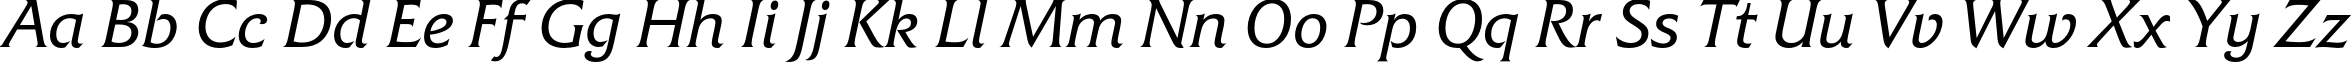 Пример написания английского алфавита шрифтом FrizQuadrataC Italic